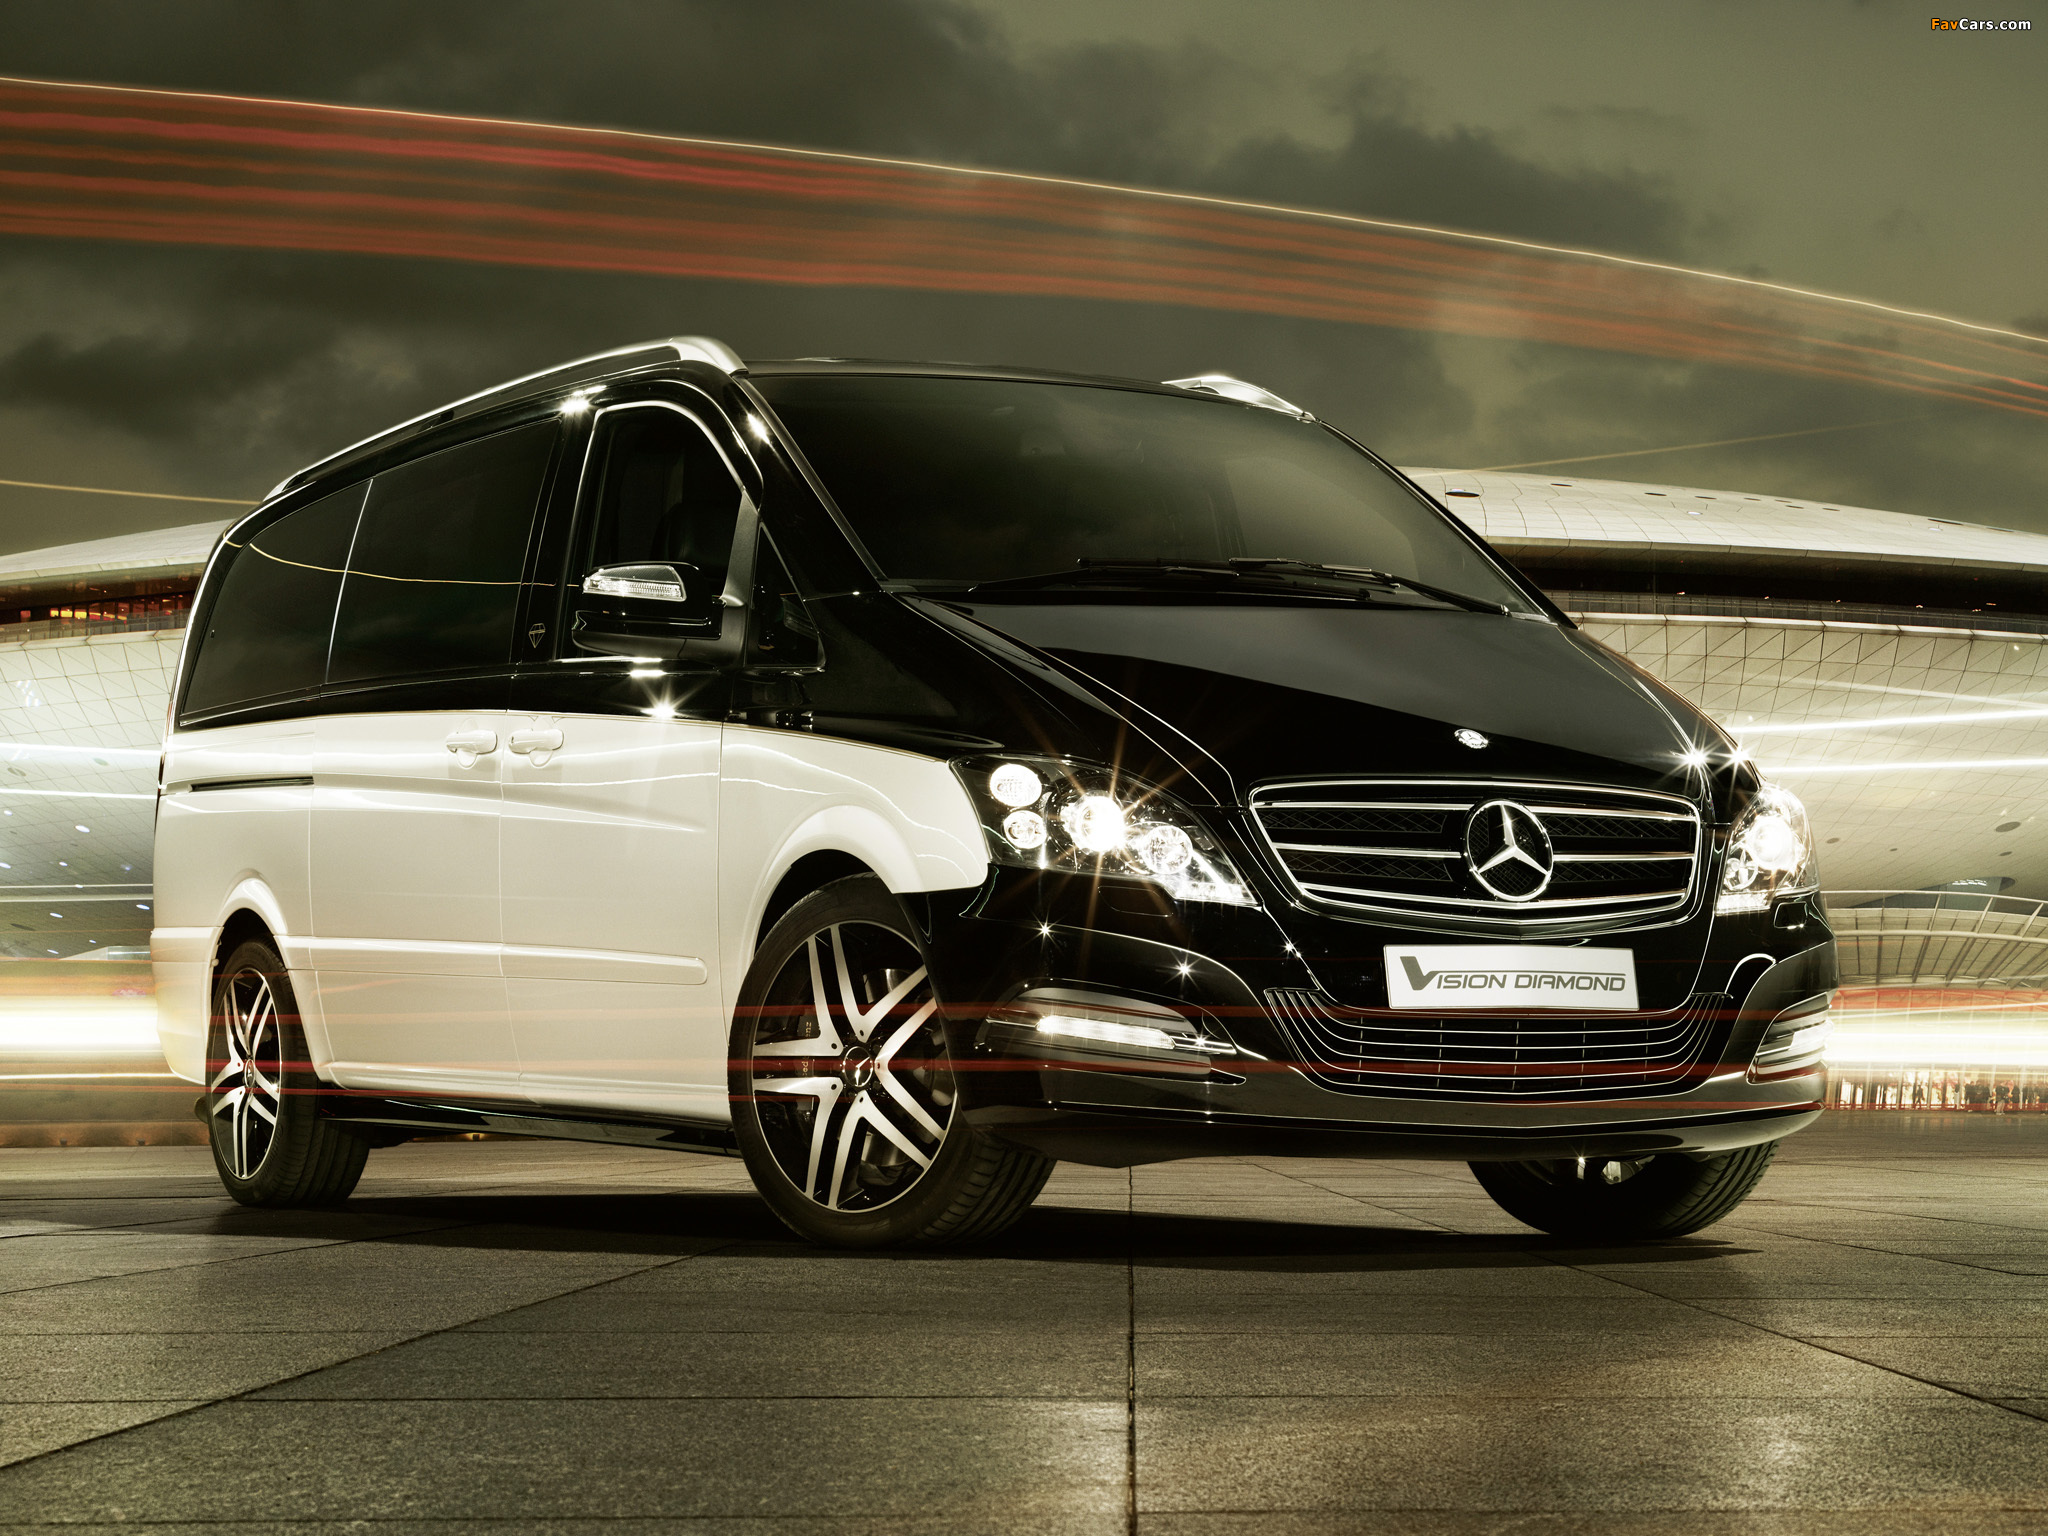 Mercedes-Benz Viano Vision Diamond Concept (W639) 2012 pictures (2048 x 1536)